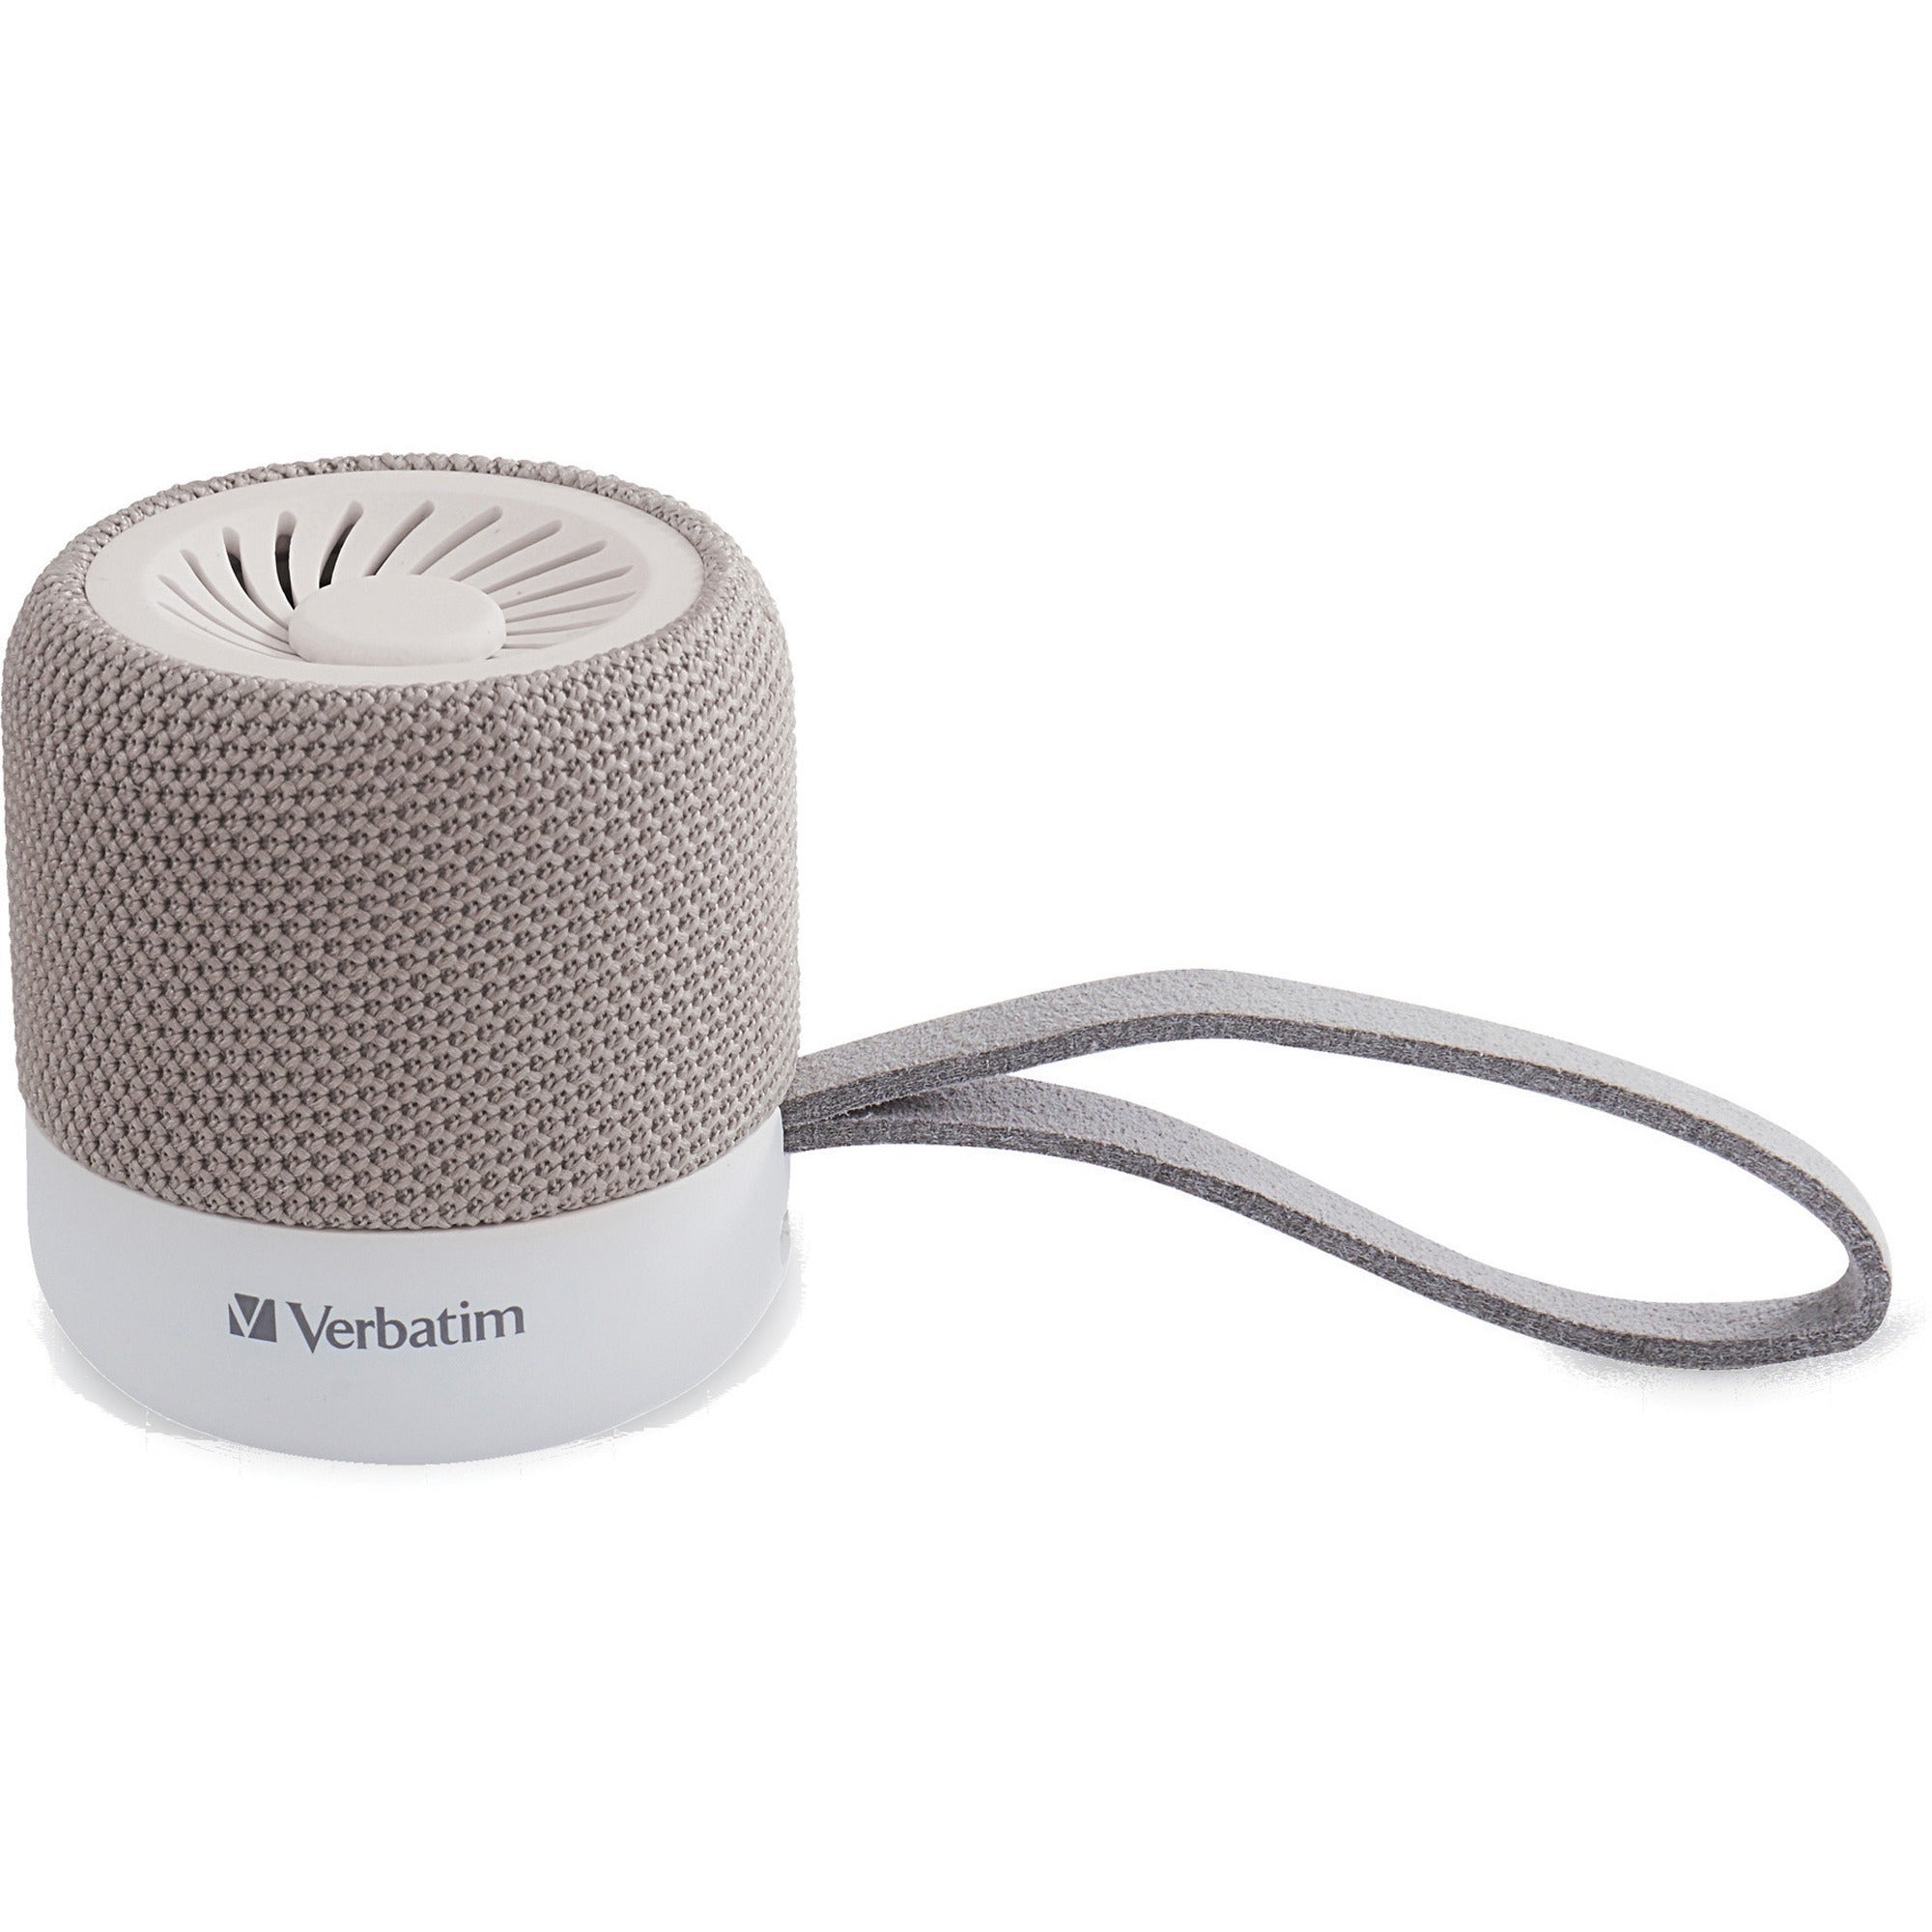 verbatim-portable-bluetooth-speaker-system-white-100-hz-to-20-khz-truewireless-stereo-battery-rechargeable-1-pack_ver70232 - 1